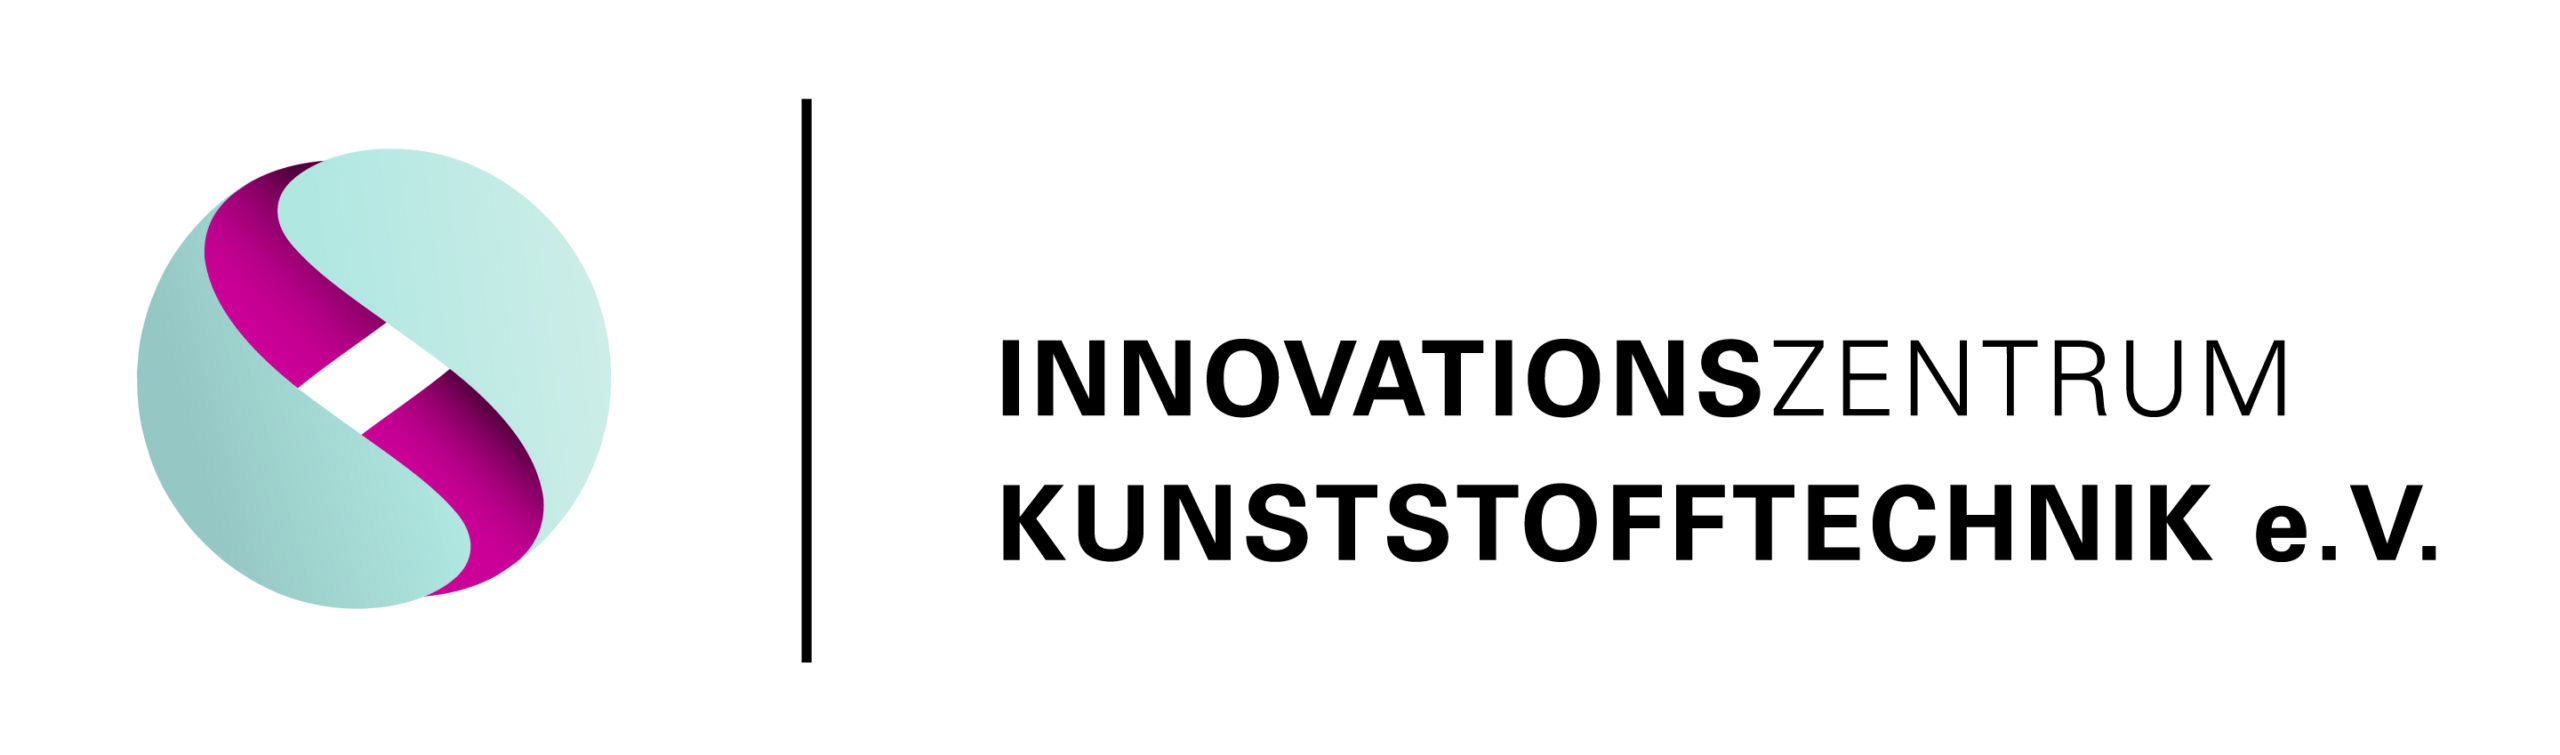 Innovationszentrum Kunststofftechnik e.V.